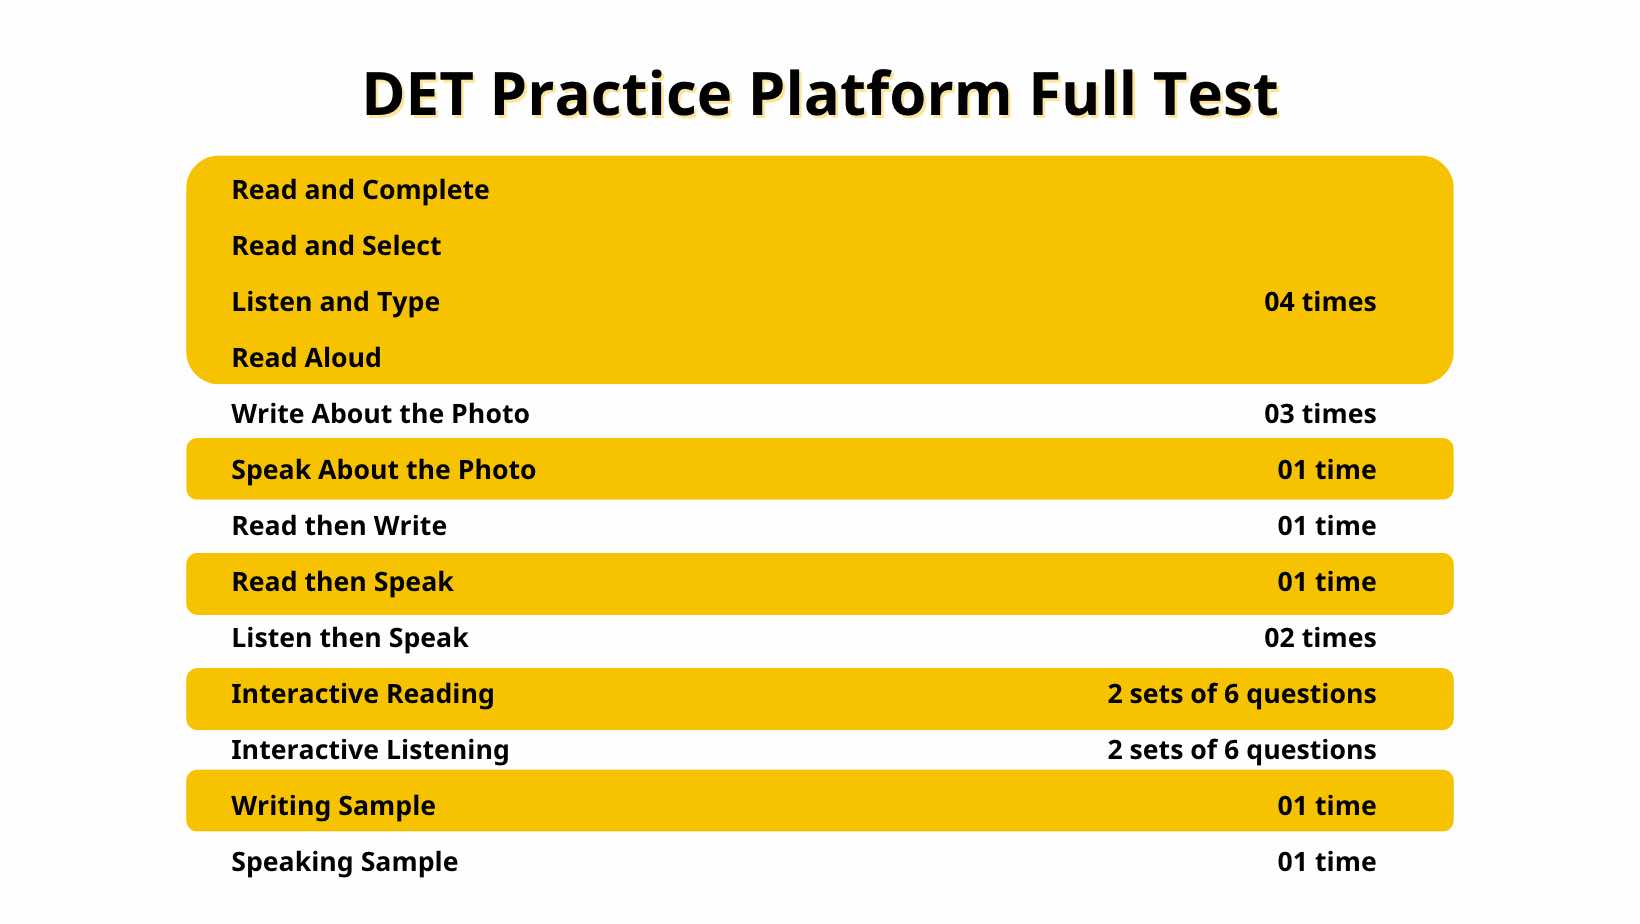 DET Question frequency, DET Practice Platform, Duolingo English Test, Duolingo test preparation, Duolingo full practice test